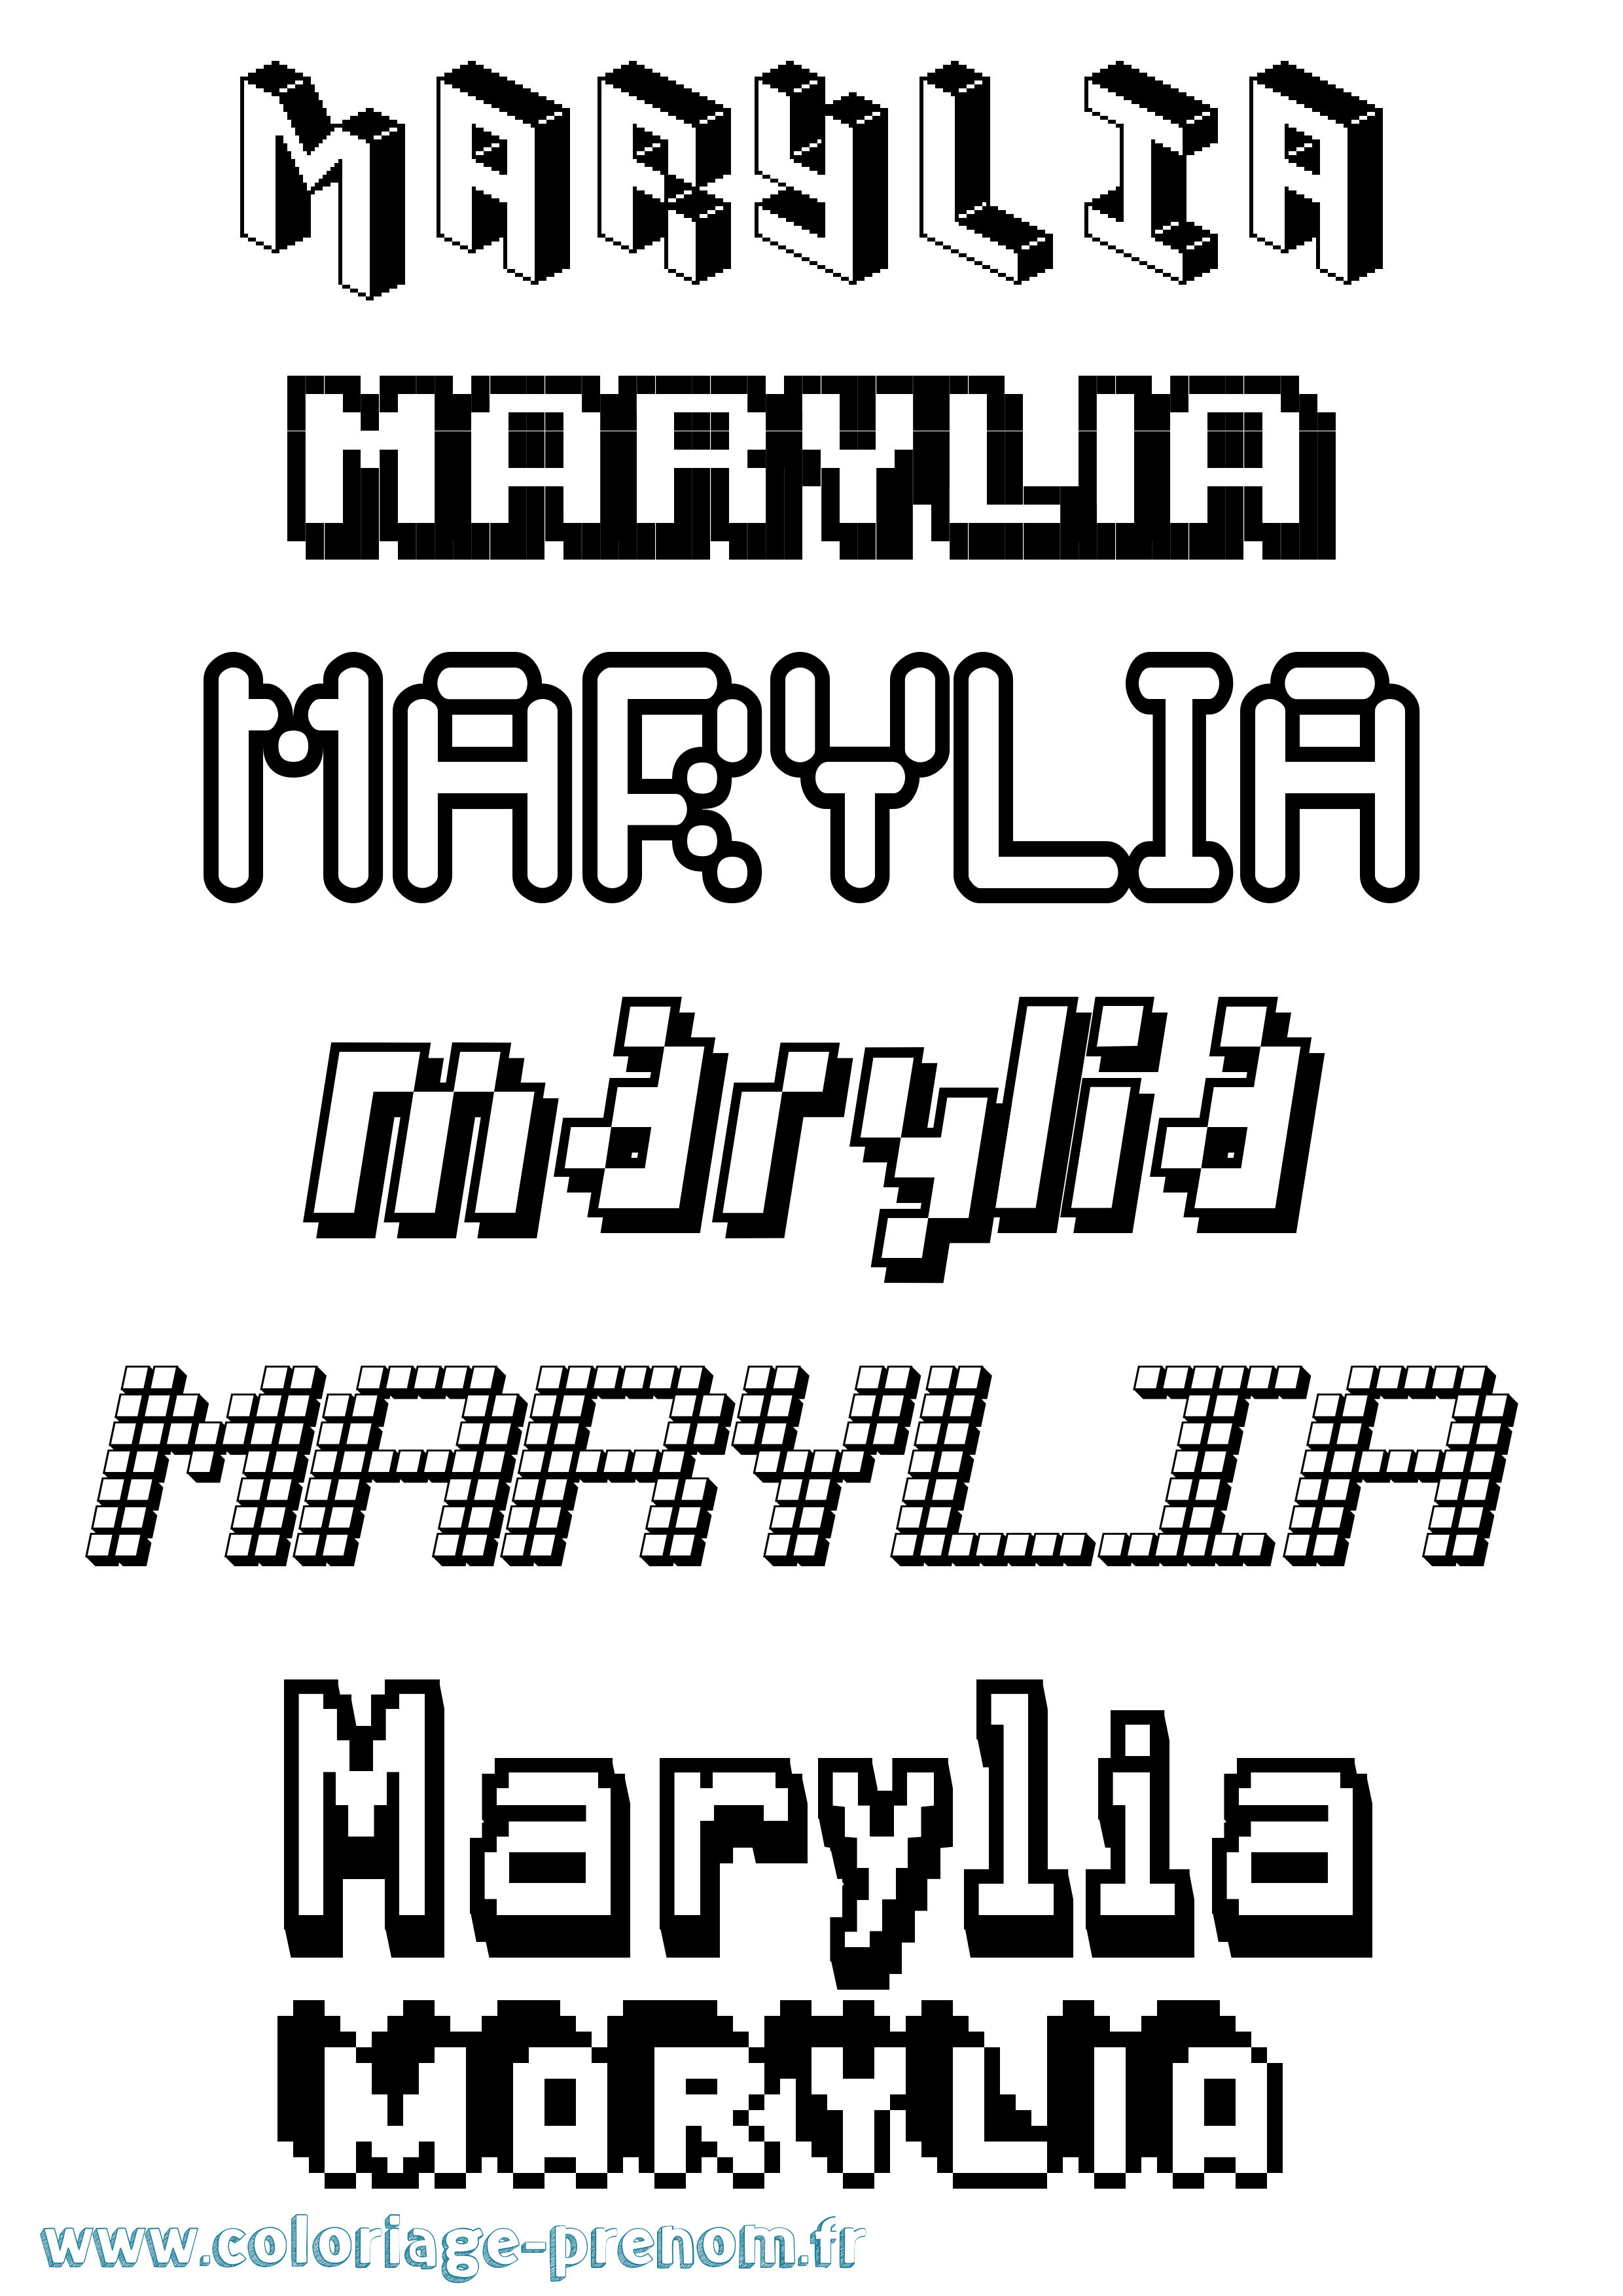 Coloriage prénom Marylia Pixel